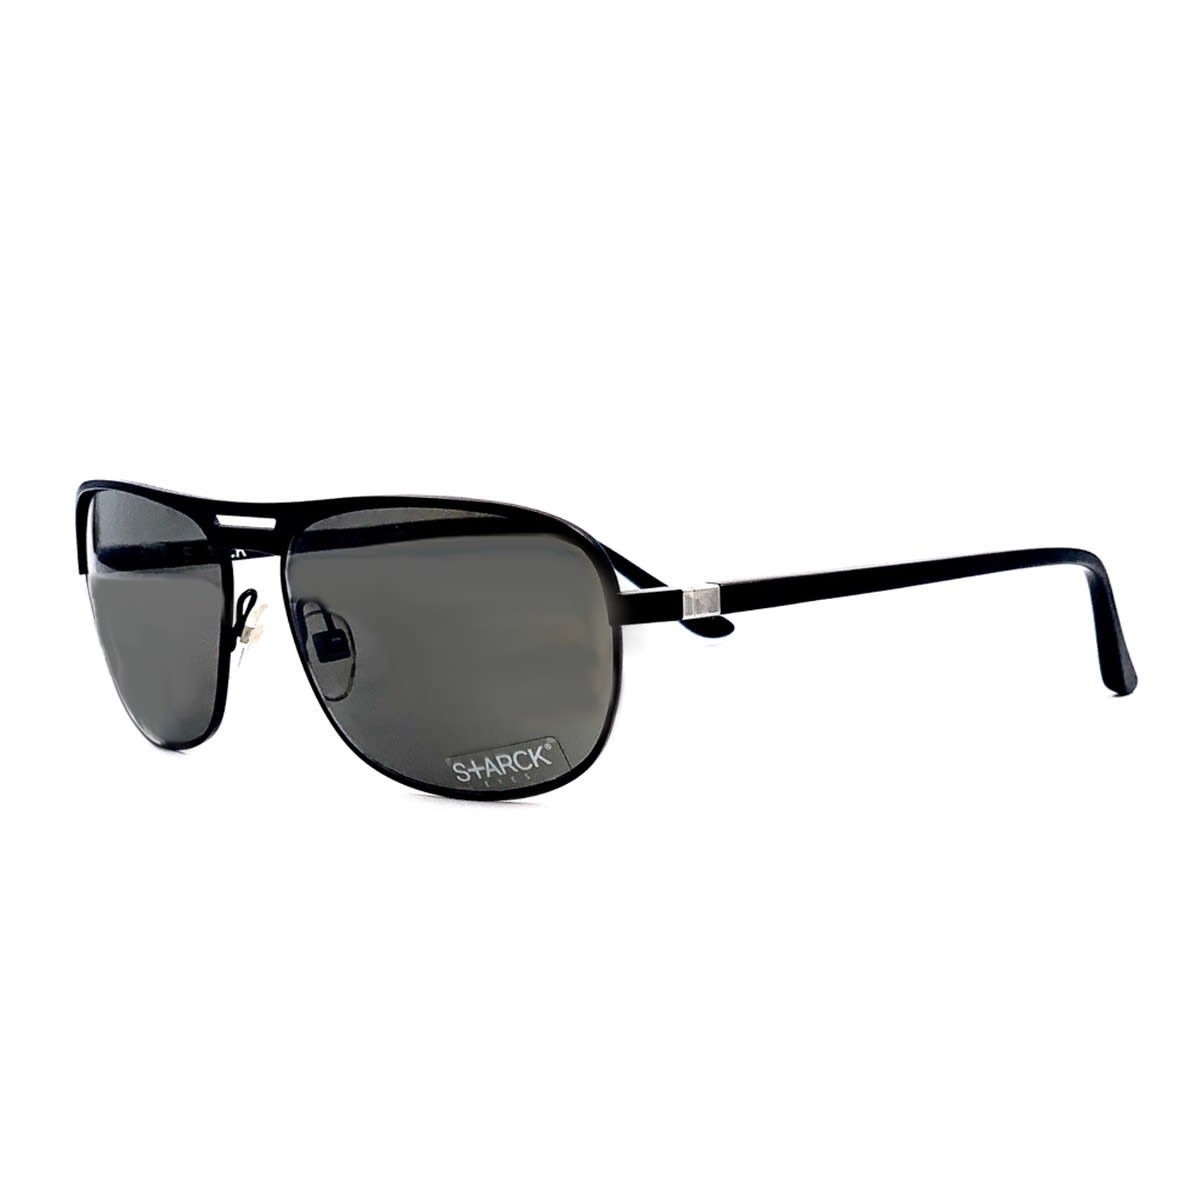 Starck Pl 1251 Sunglasses